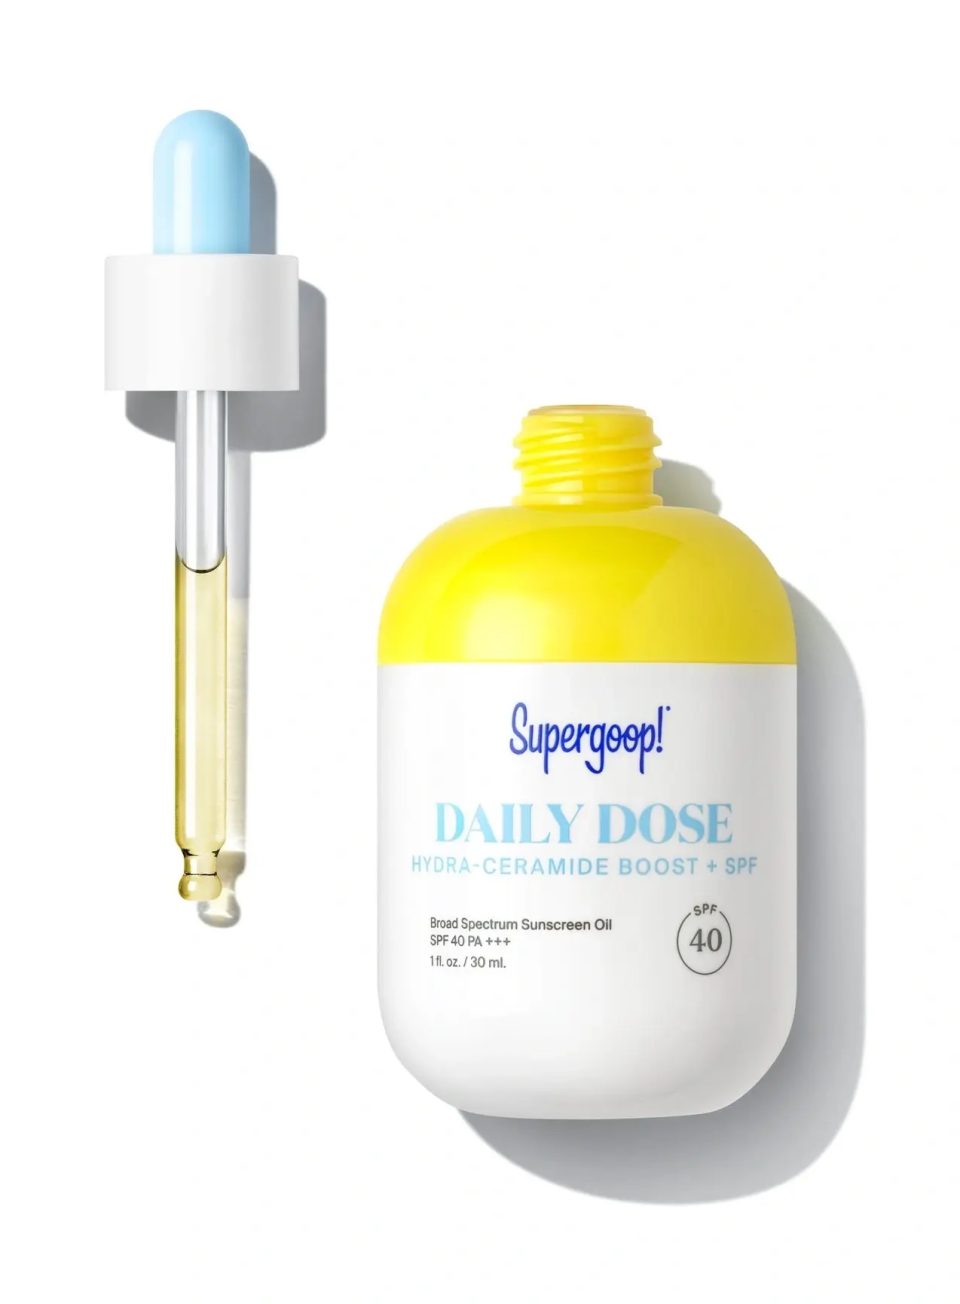 supergoop-daily-dose-hydra-ceramide-boost-applicator-spf-40-pack-and-applicator-30ml_1